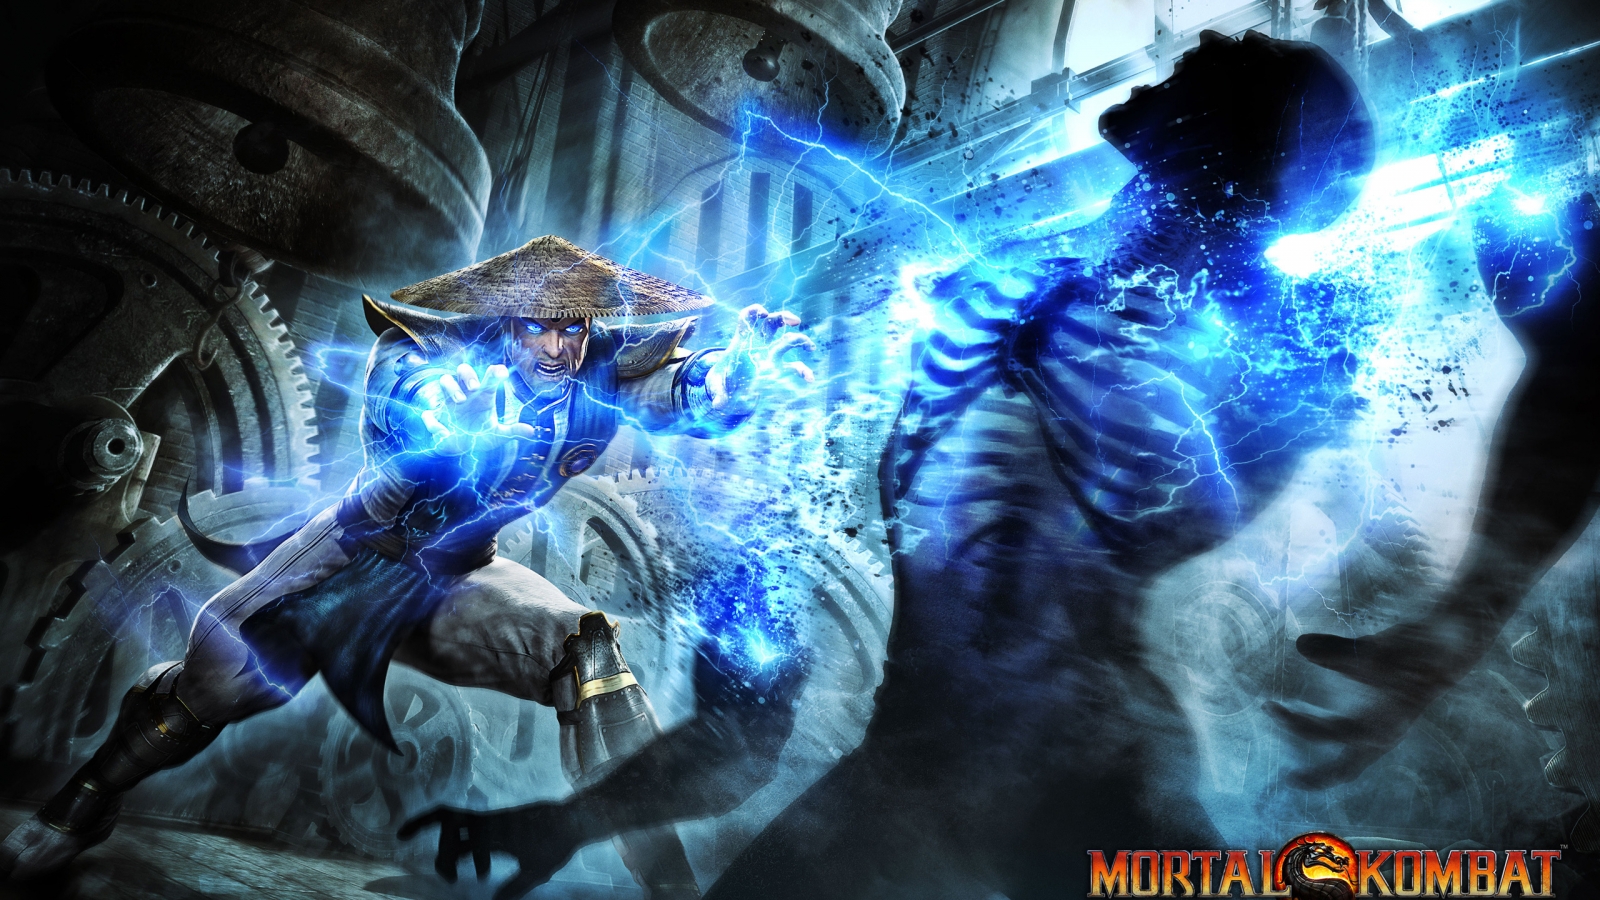 Mortal Kombat Raiden for 1600 x 900 HDTV resolution